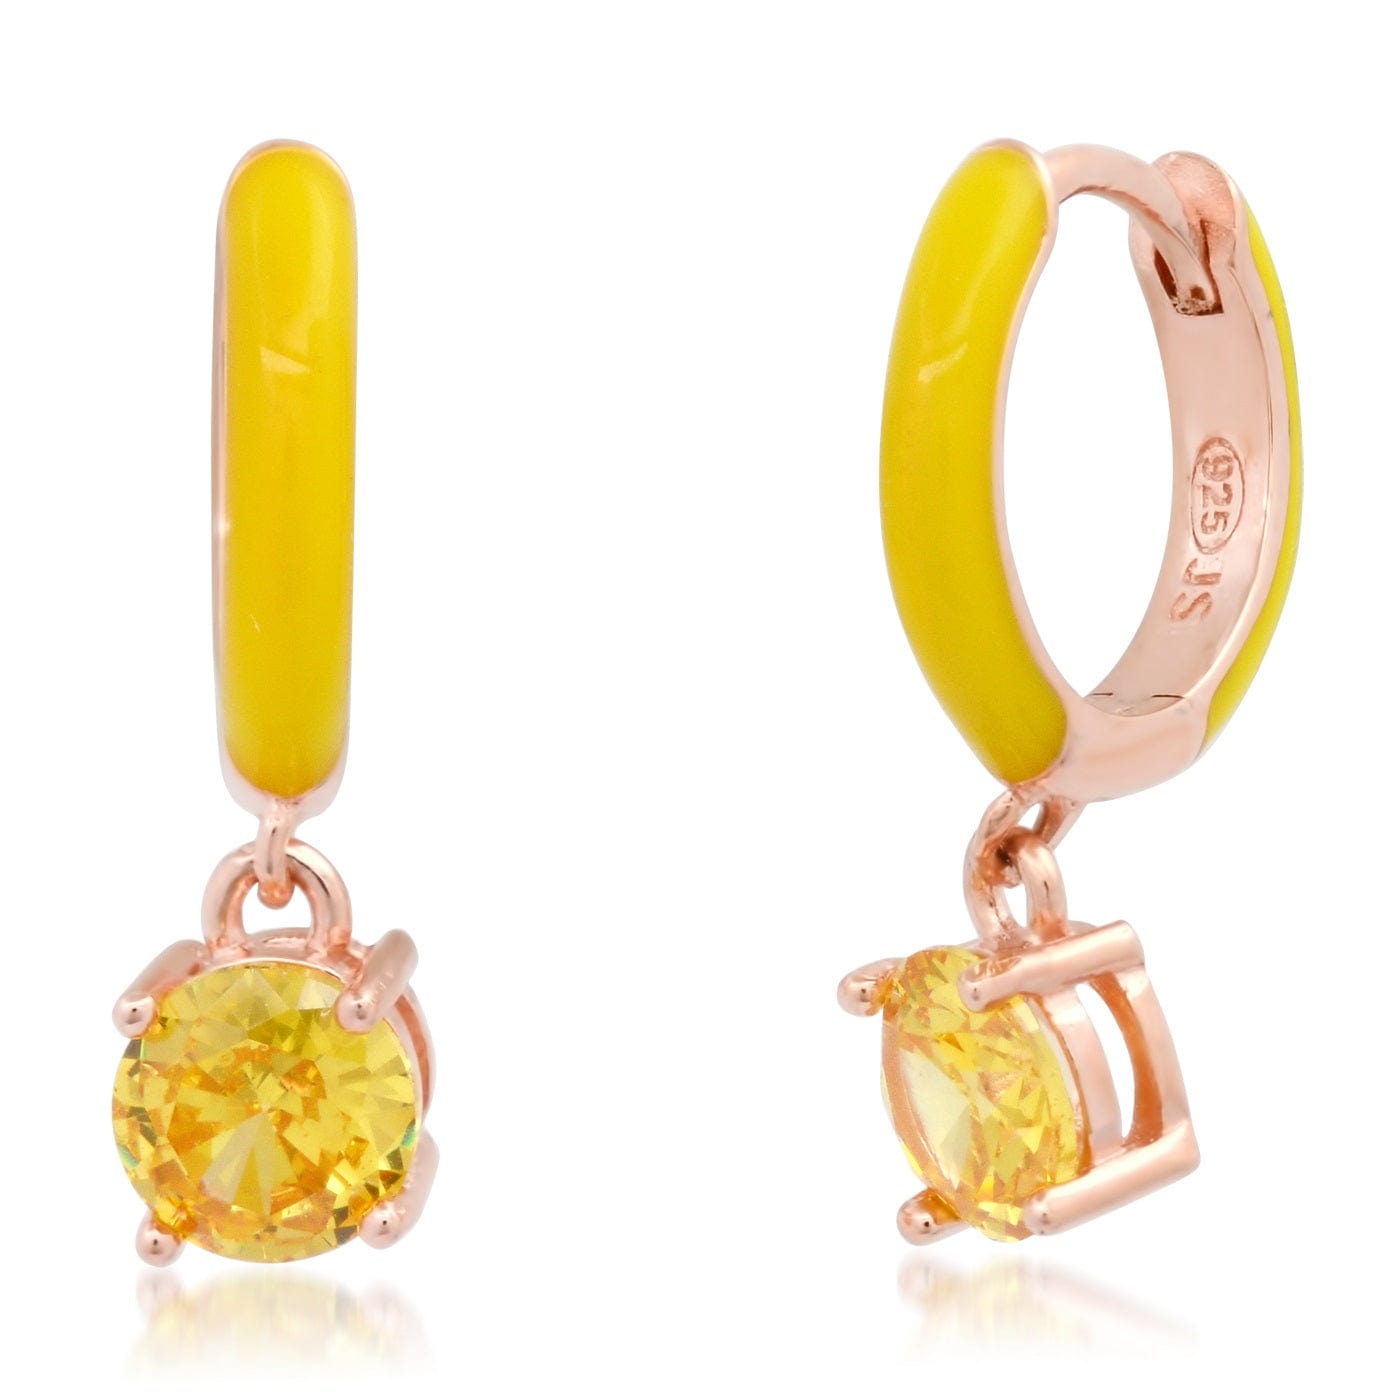 TAI JEWELRY Earrings Yellow Enamel Huggie with Colored CZ Charm